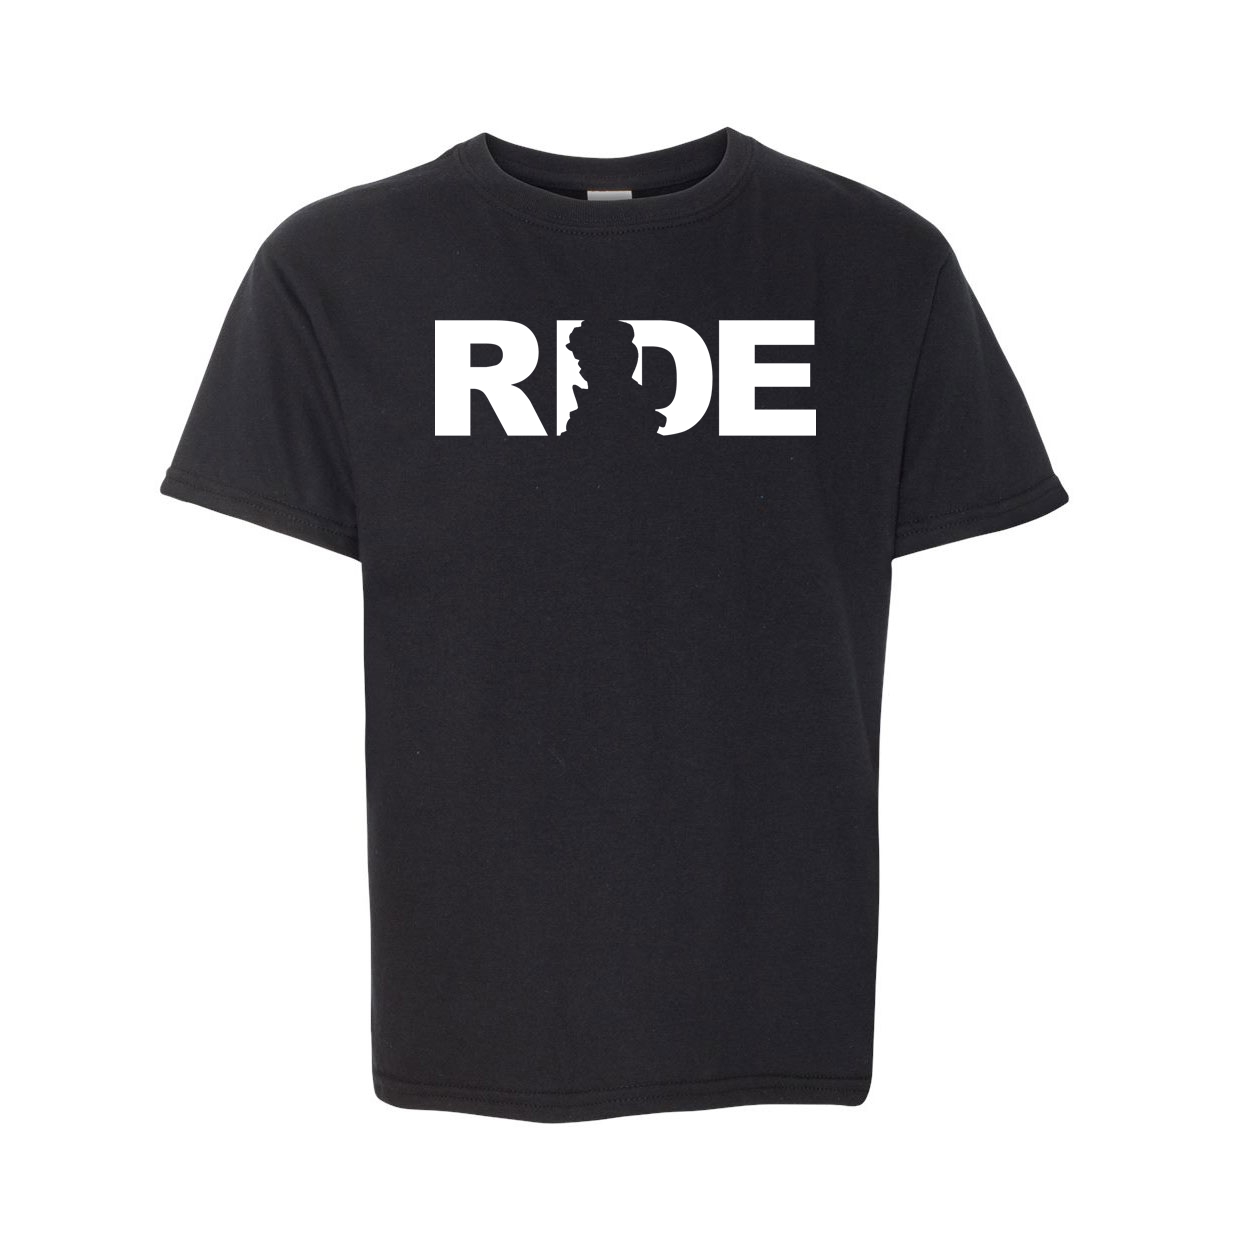 Ride Scotland Classic Youth T-Shirt Black (White Logo)